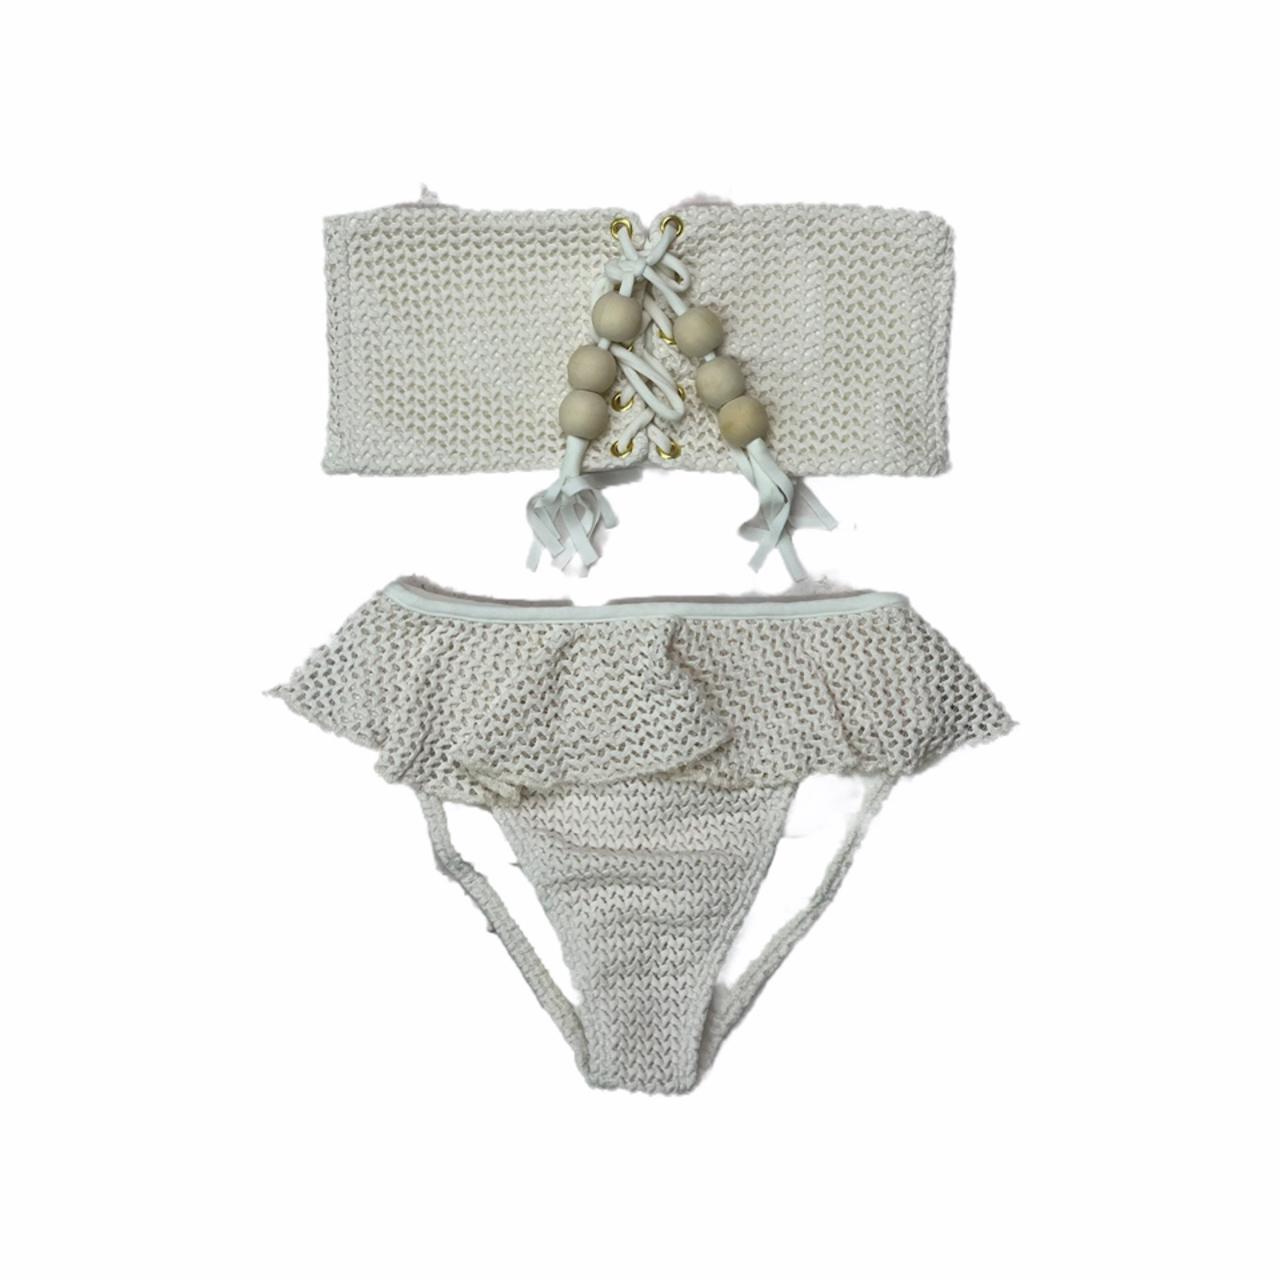 Product Image 1 - Montce white woven bandeau bikini

Size